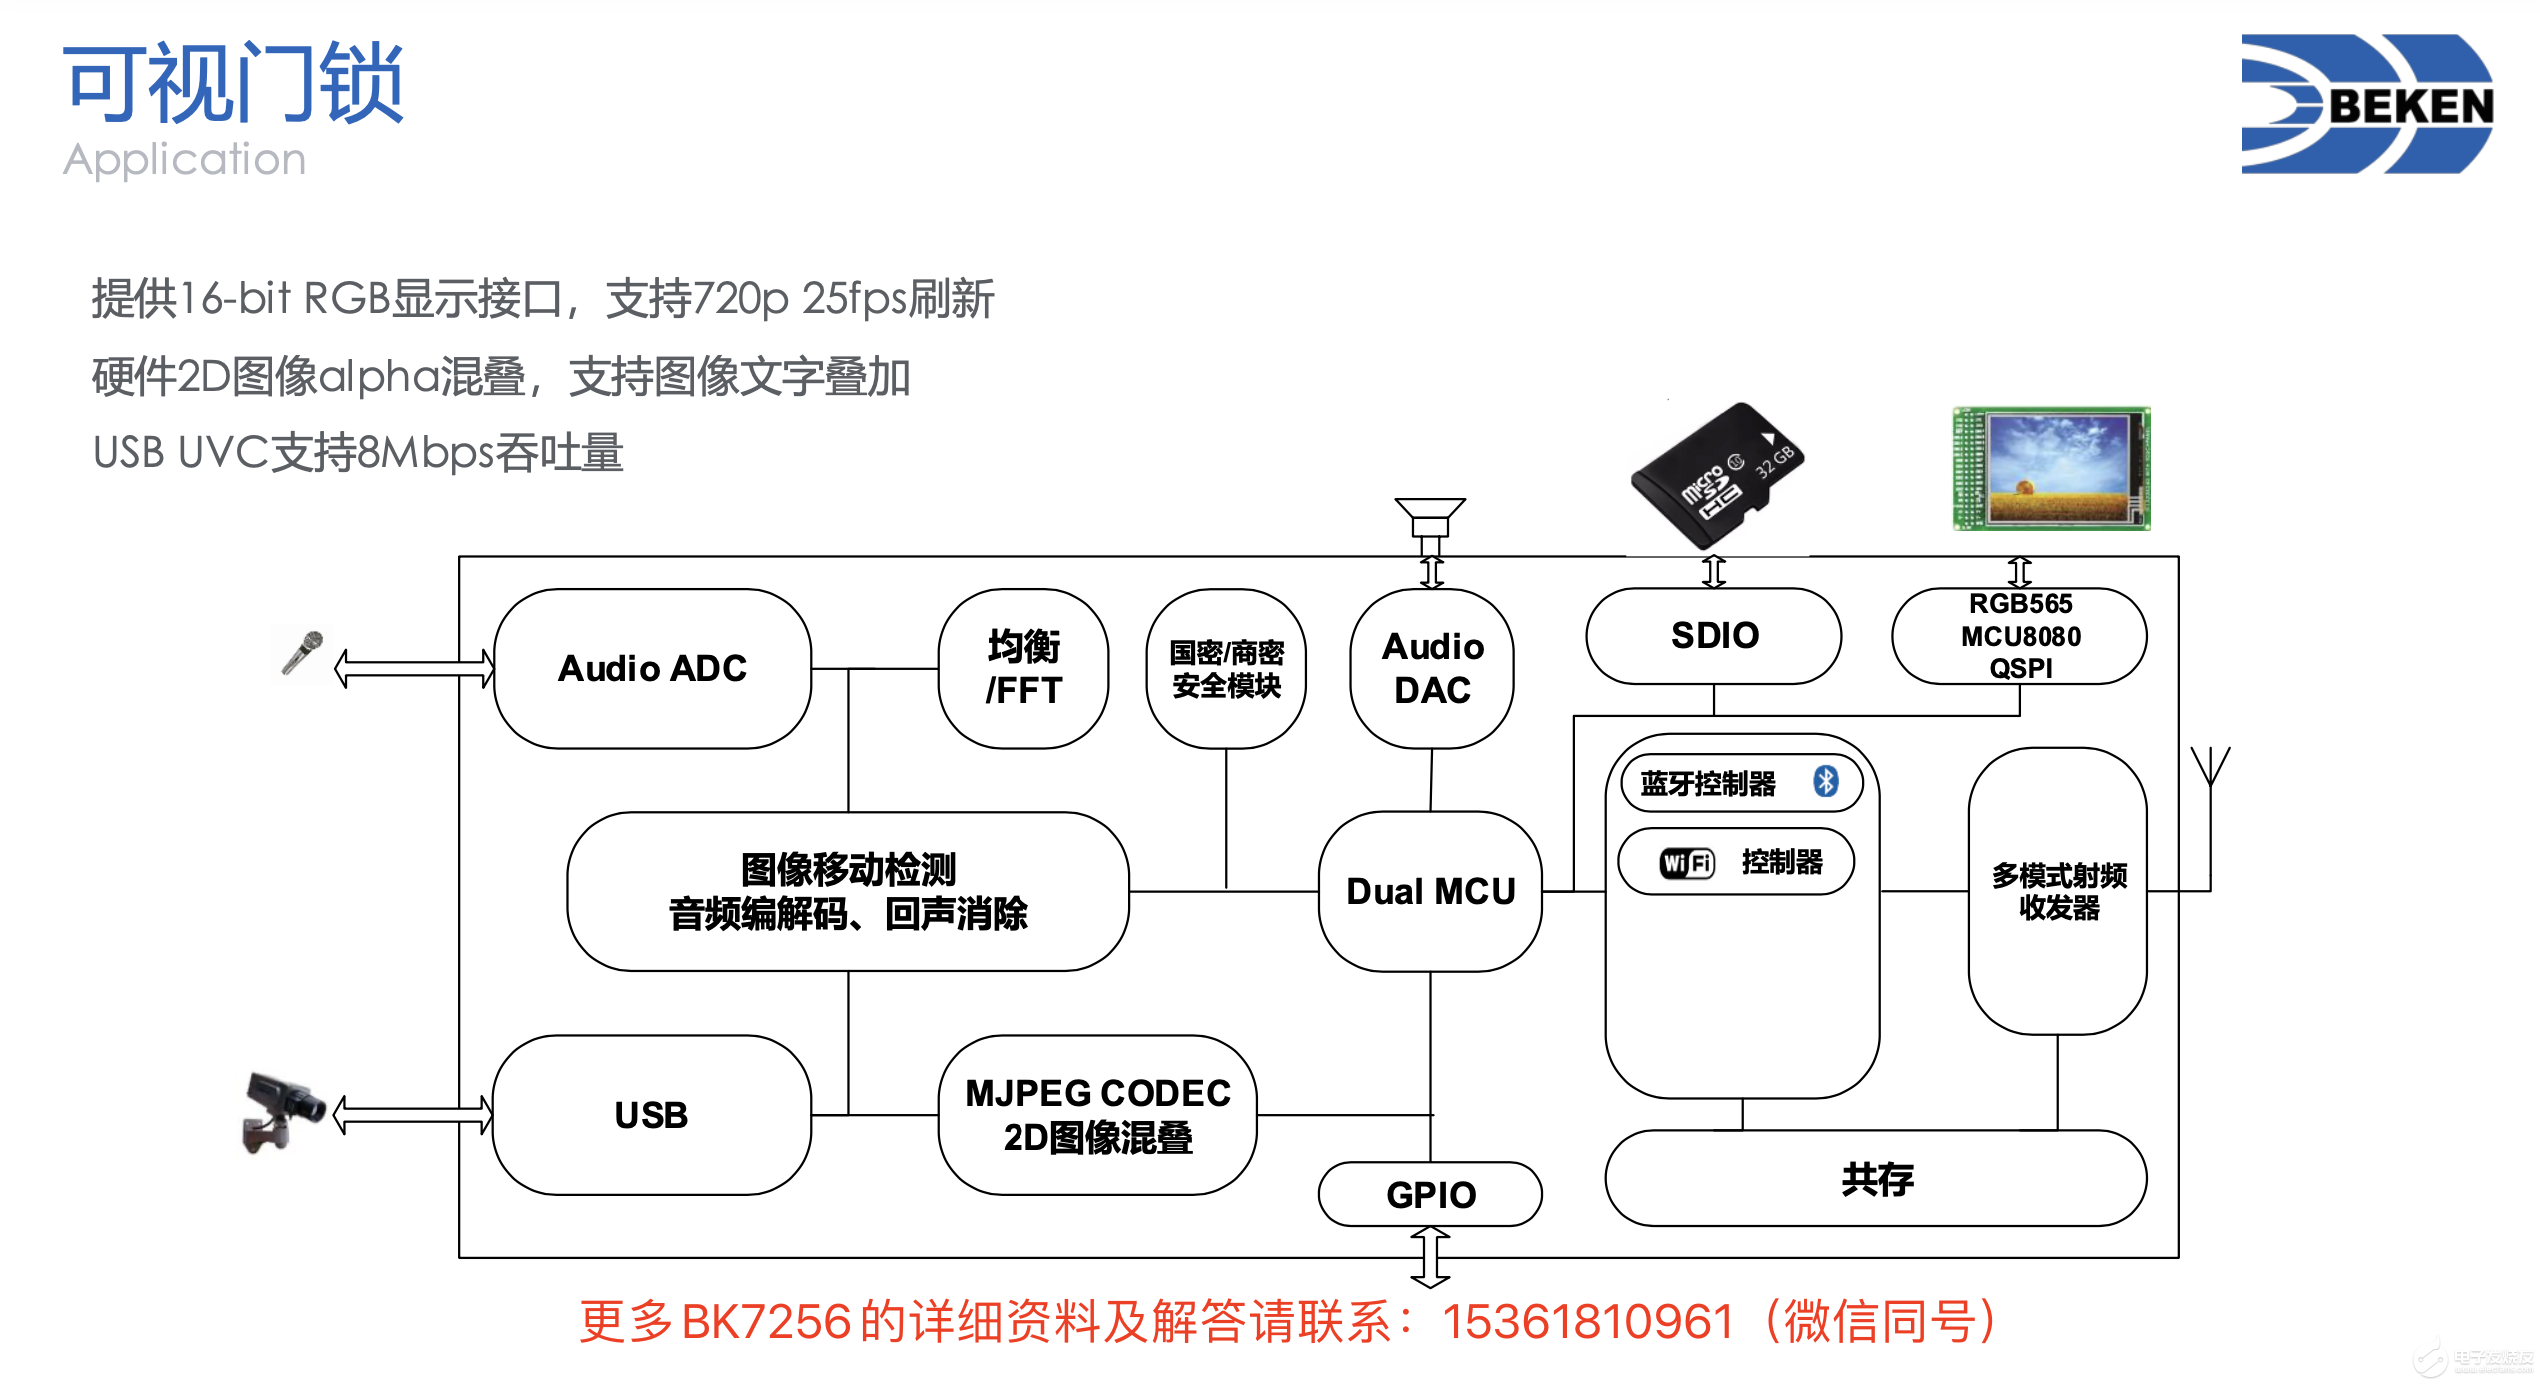 BK7256-上海博通Wi-Fi+蓝牙soc音视频芯片，单芯片集成dsp，flash，psram，Wi-Fi+蓝牙